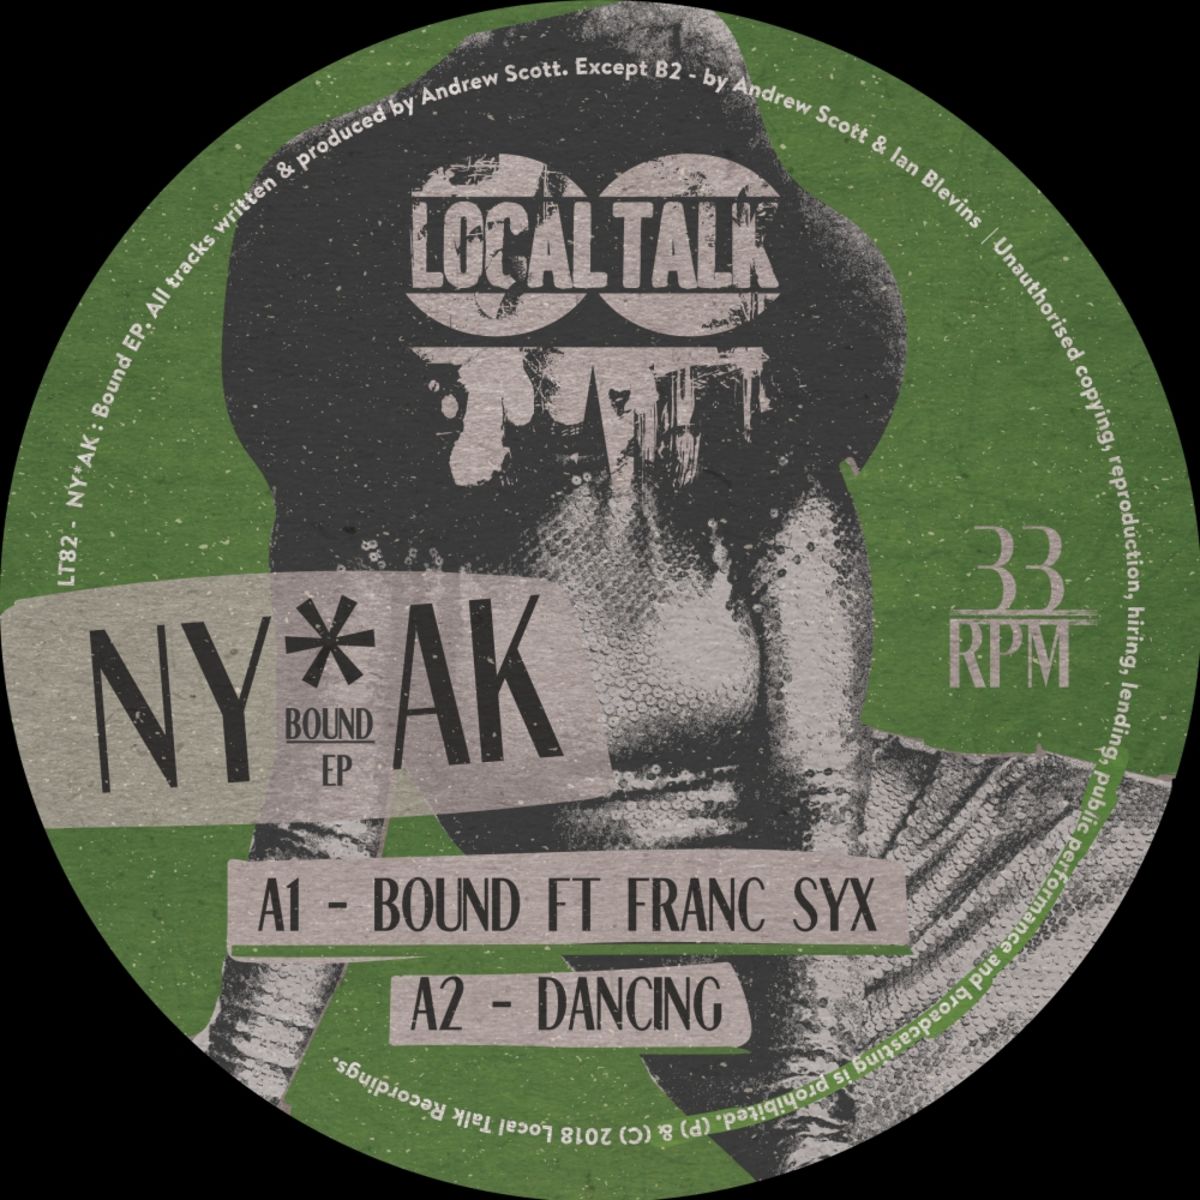 NY*AK - Bound EP / Local Talk